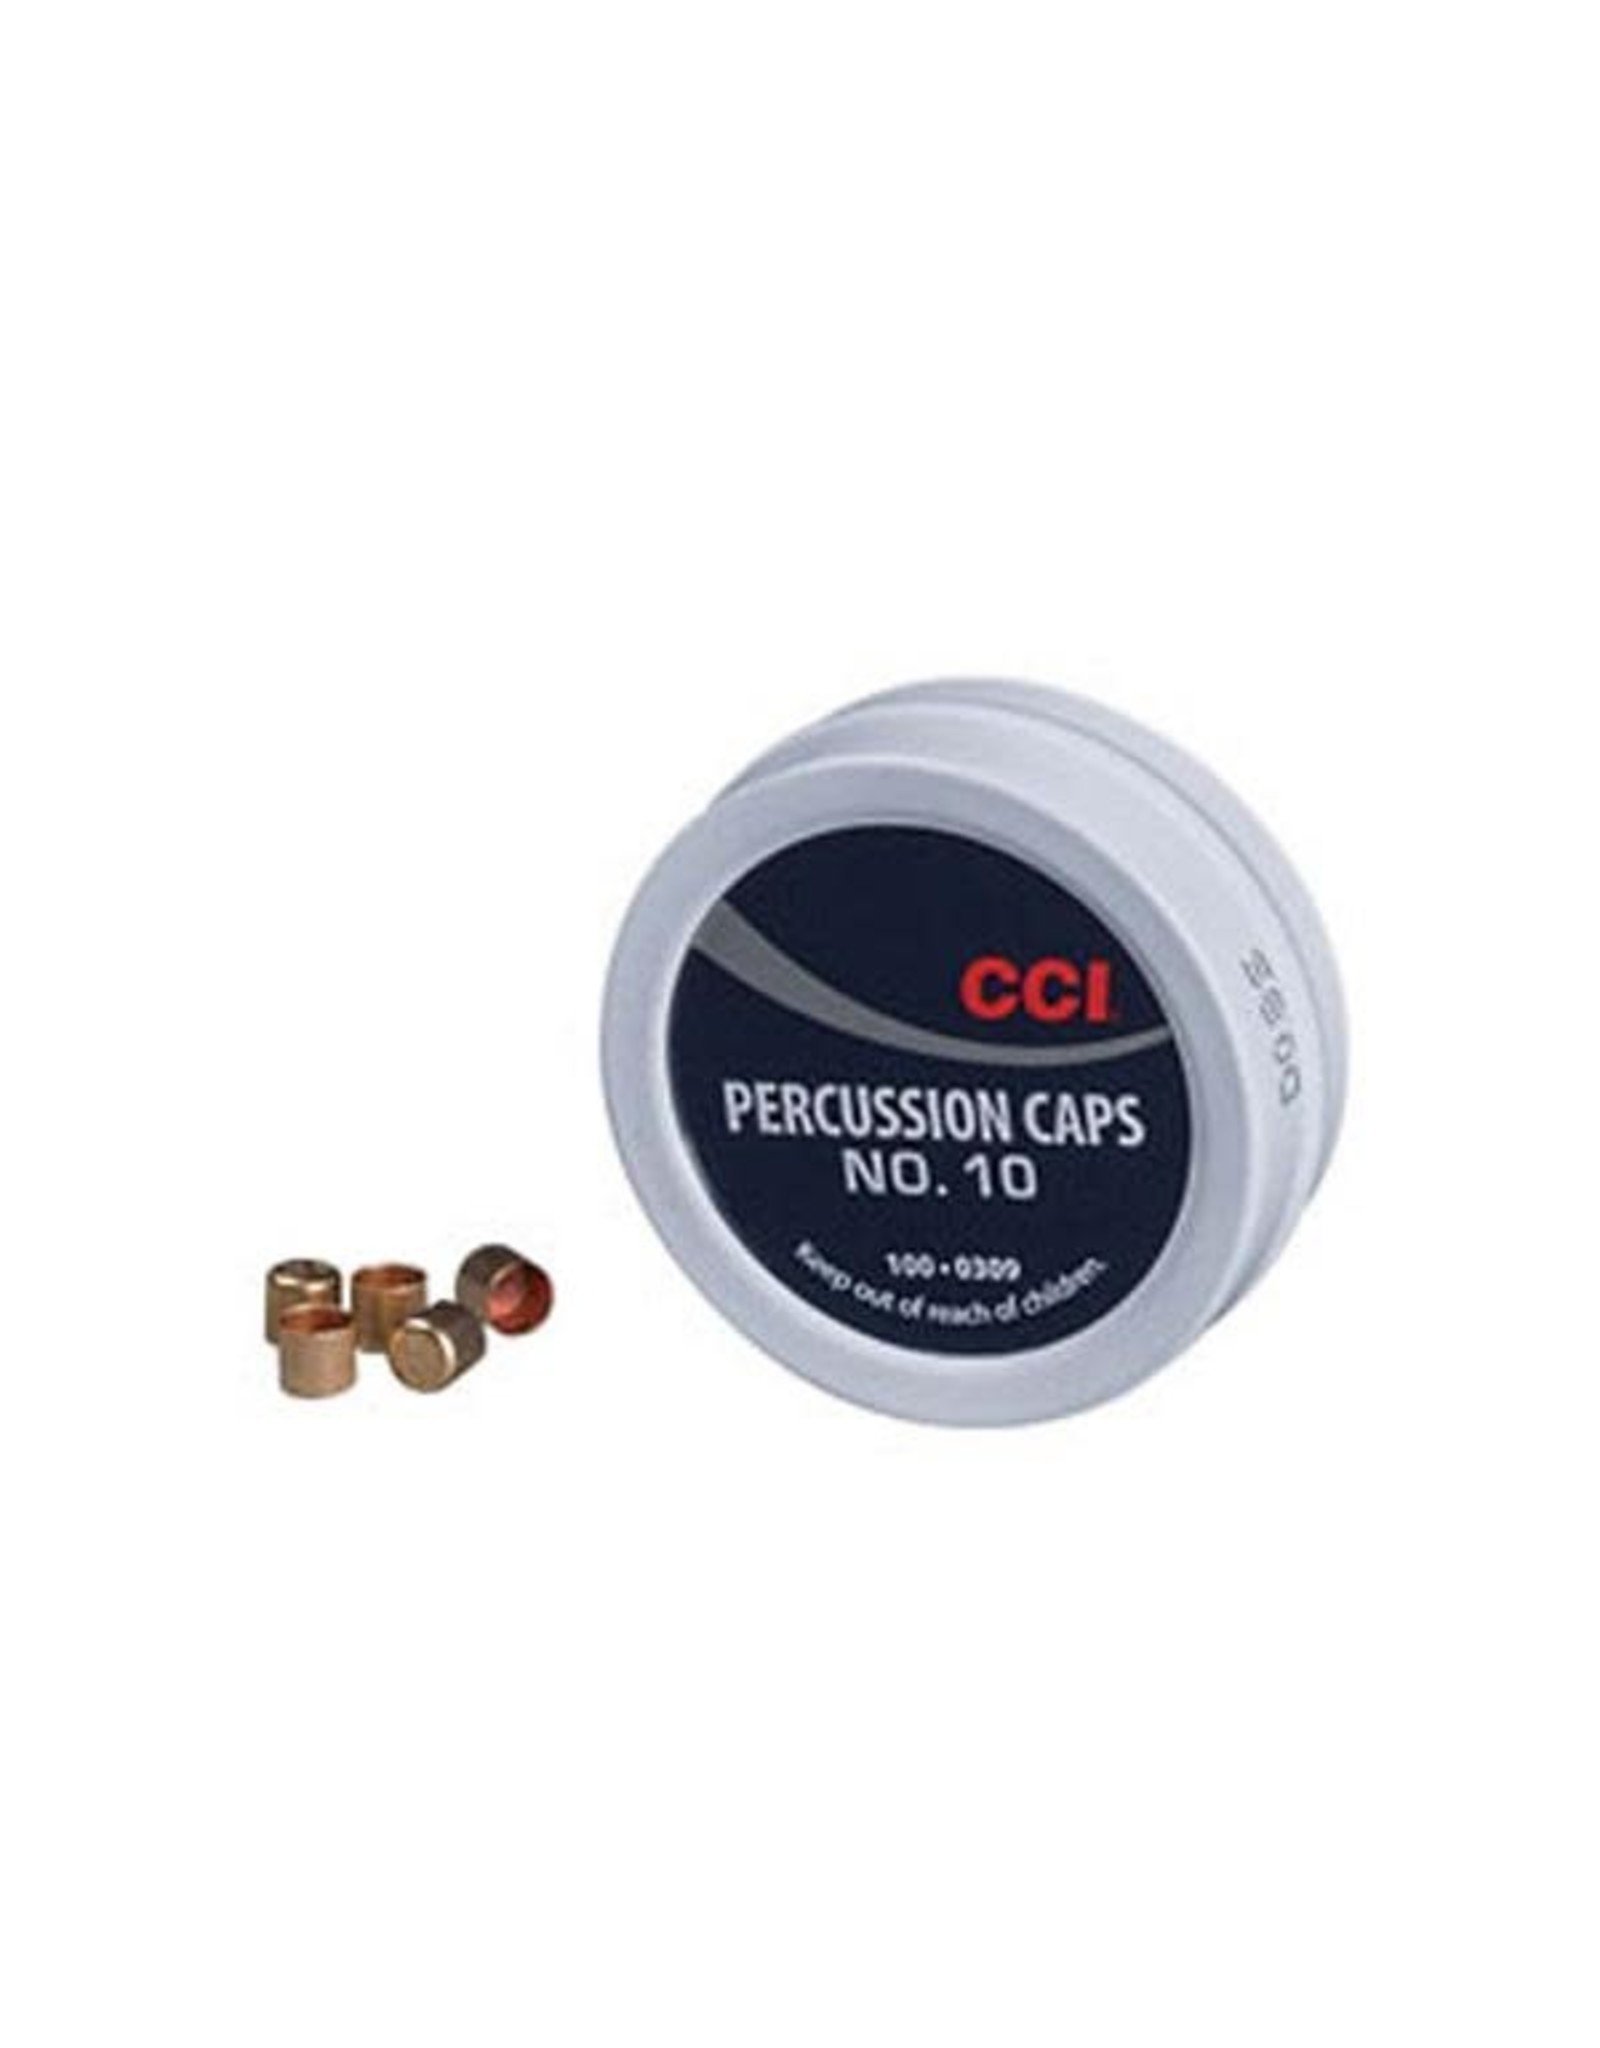 CCI CCI 0309 Percussion Cap #10 100Bx/Pk 10 Tins/Case